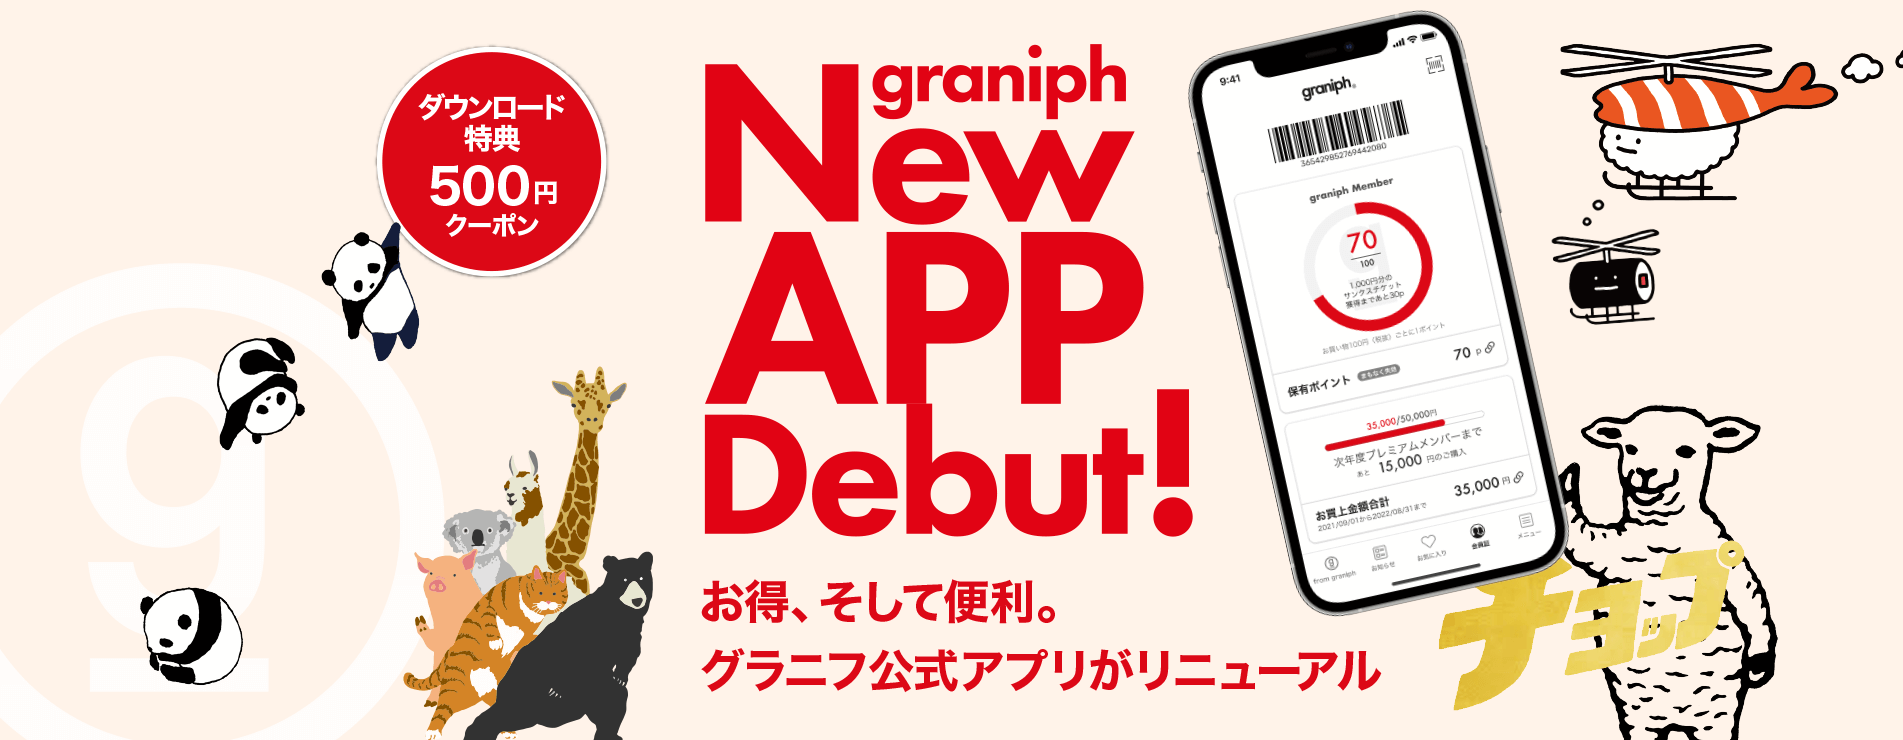 New APP Debut! お得、そして便利。グラニフ公式アプリがリニューアル